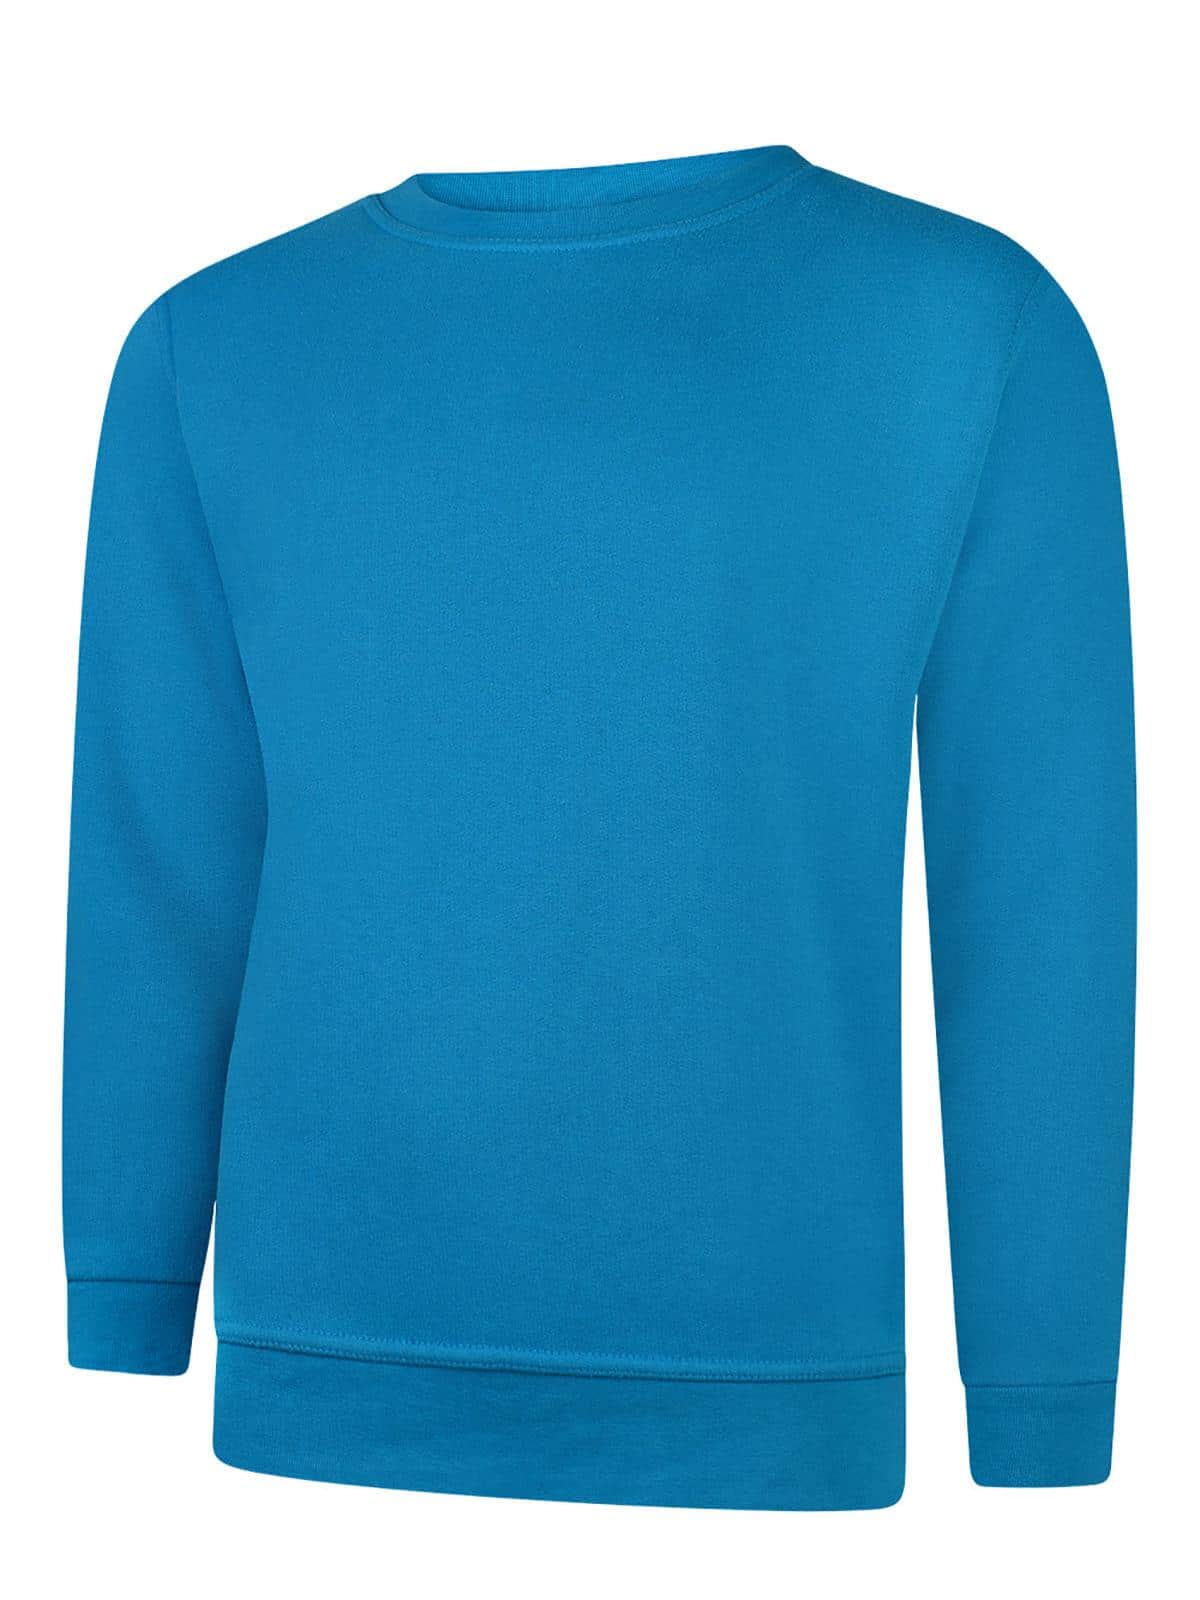 Uneek Classic Sweatshirt - Unisex Fit